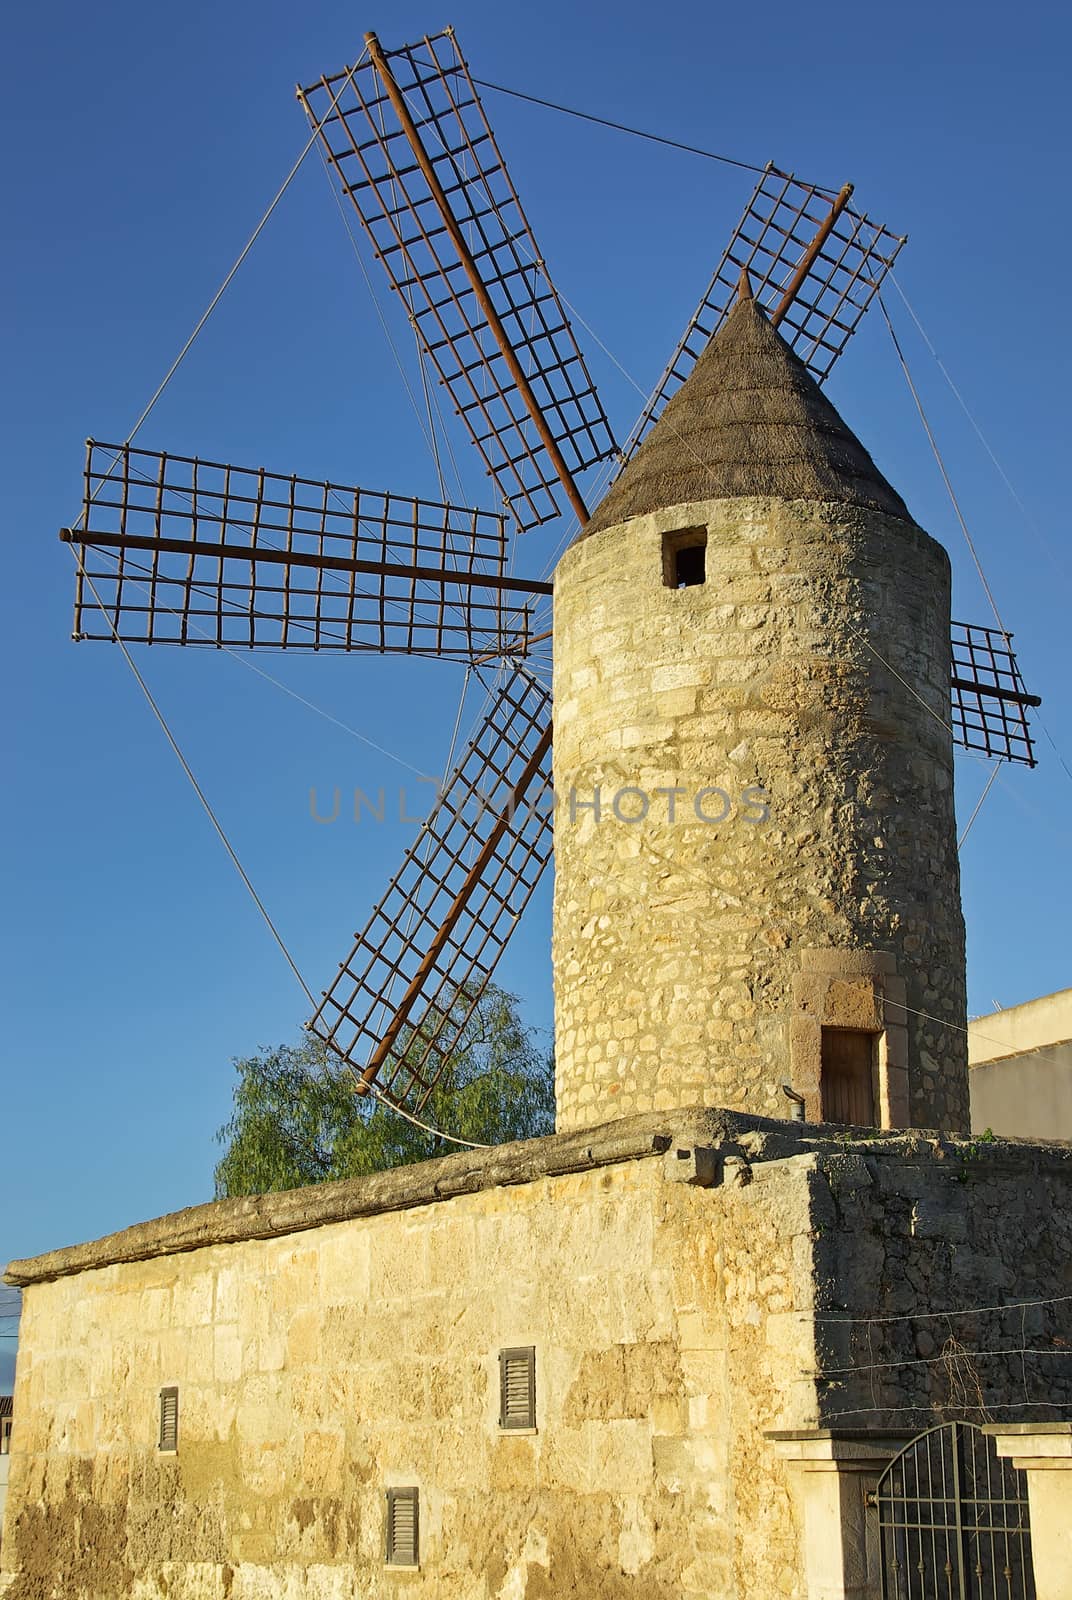 Ancient Mediterranean Windmill in Manacor (Majorca - Spain)